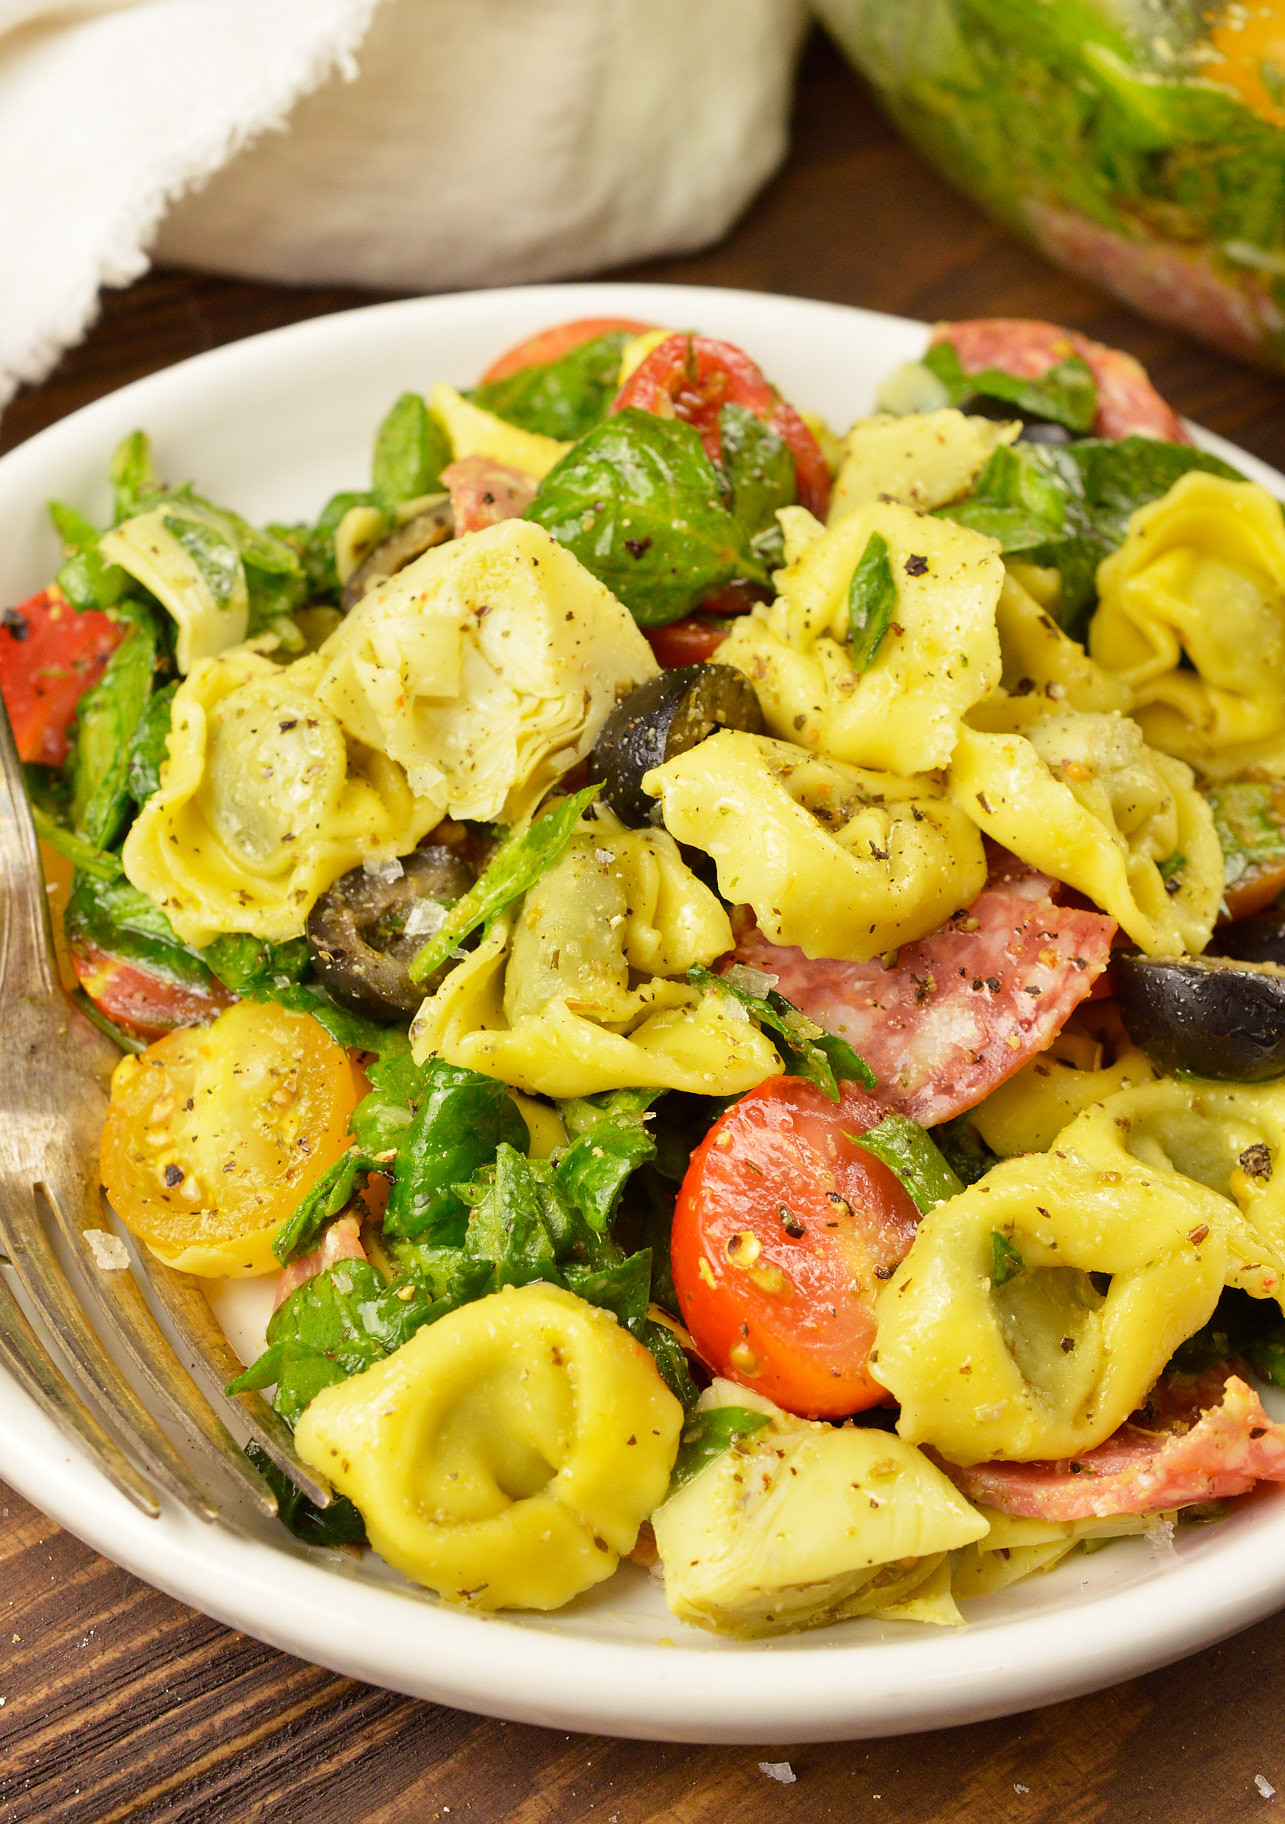 Italian Food Recipes Luxury Spinach tortellini Italian Pasta Salad Recipe Video